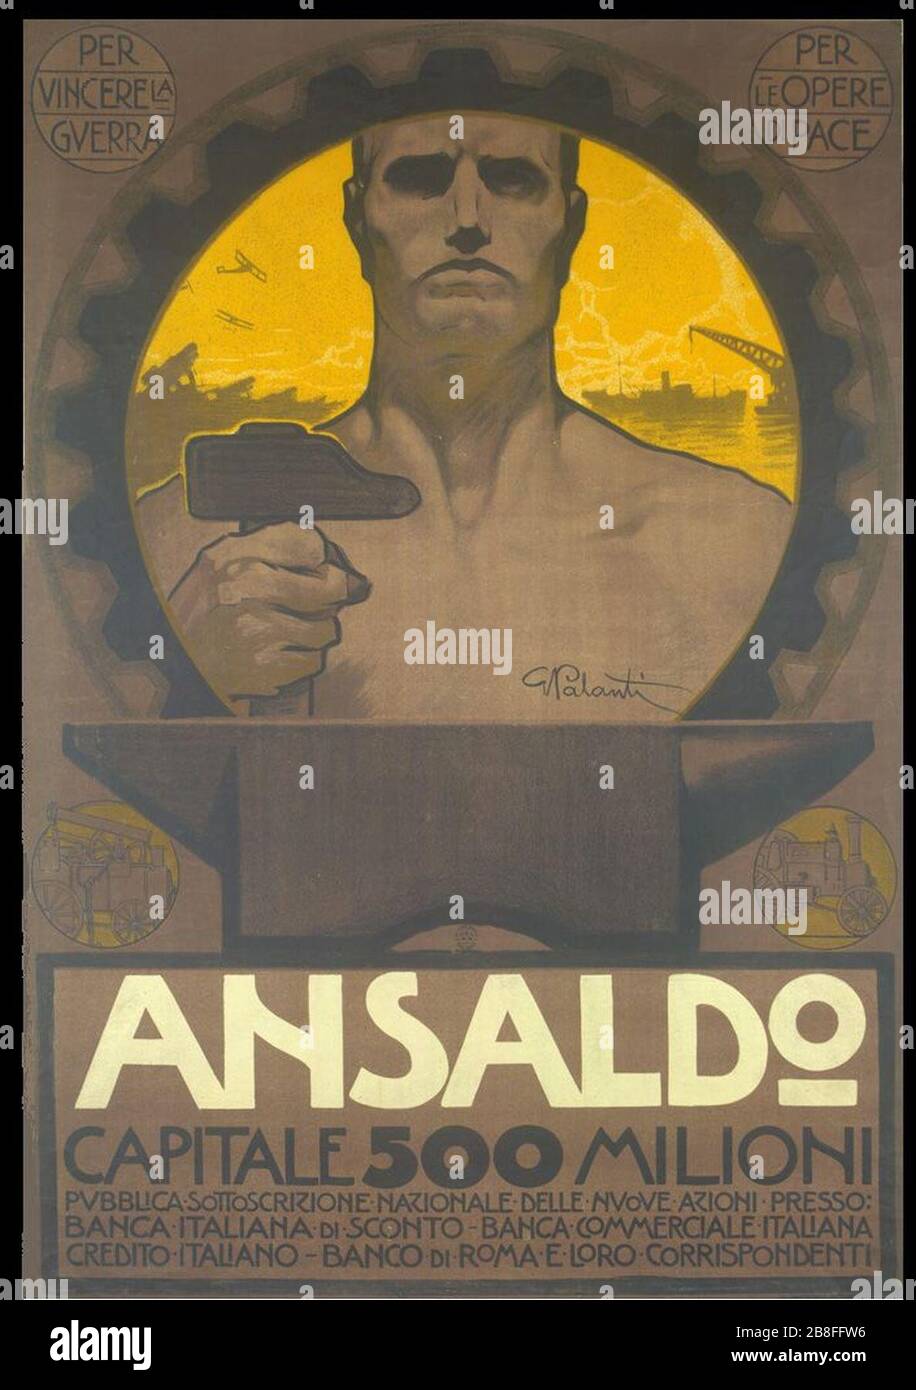 Giuseppe Palanti - Pubblicità Ansaldo 1918. Stock Photo